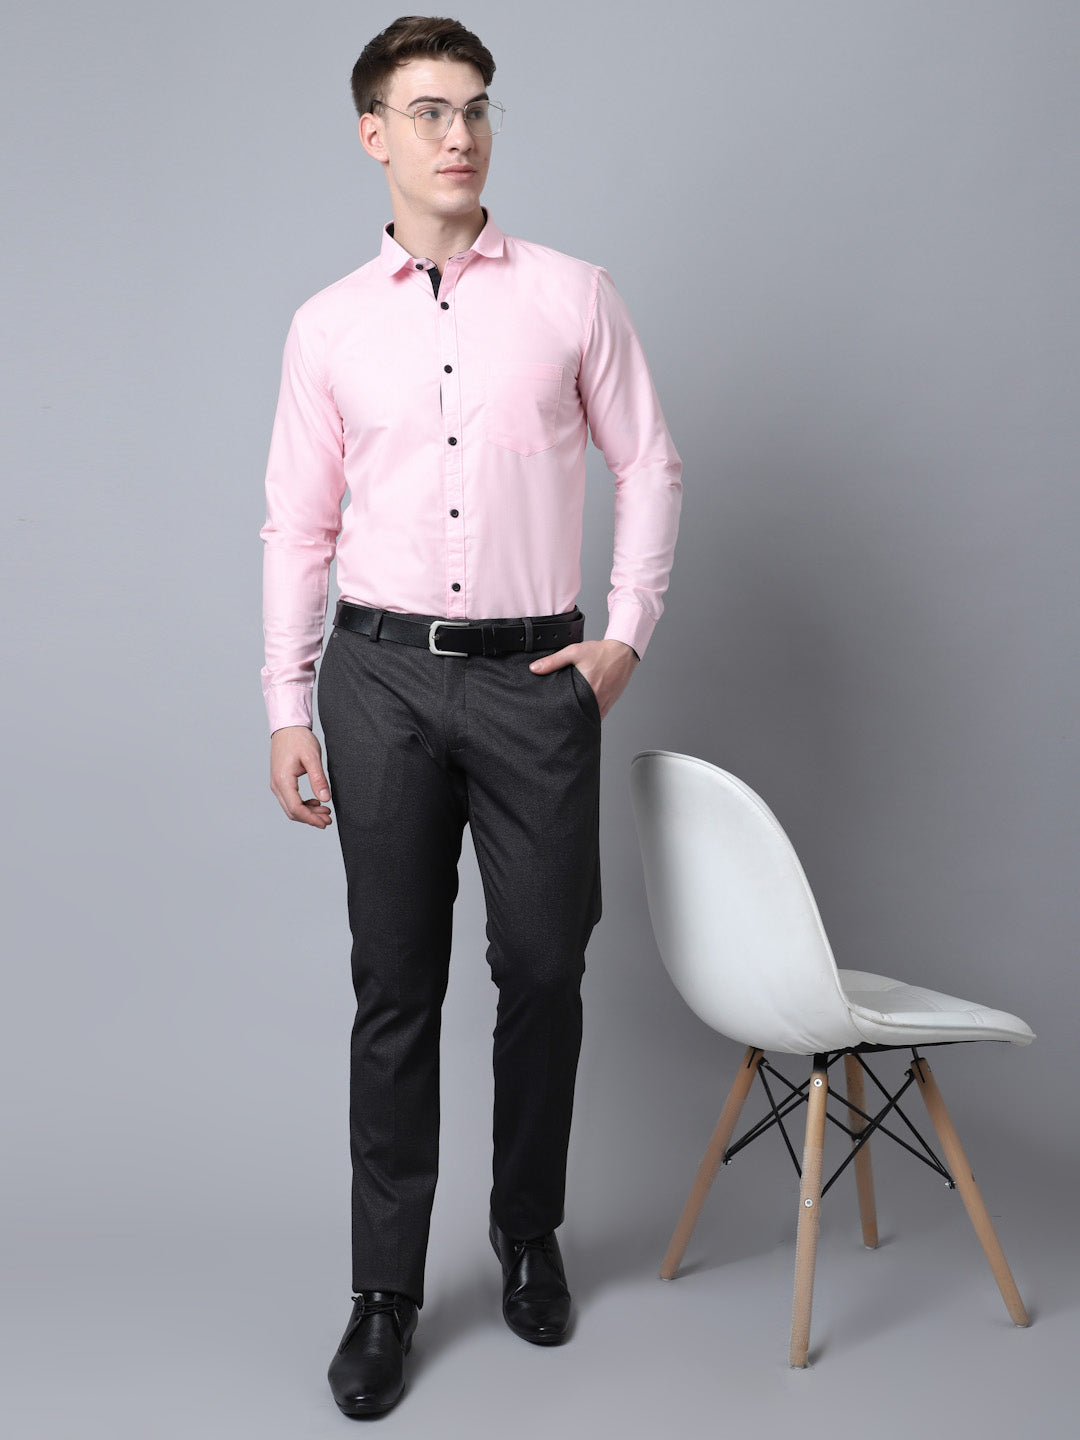 Majestic Man Versatile Solid Formal Shirt - Light Pink